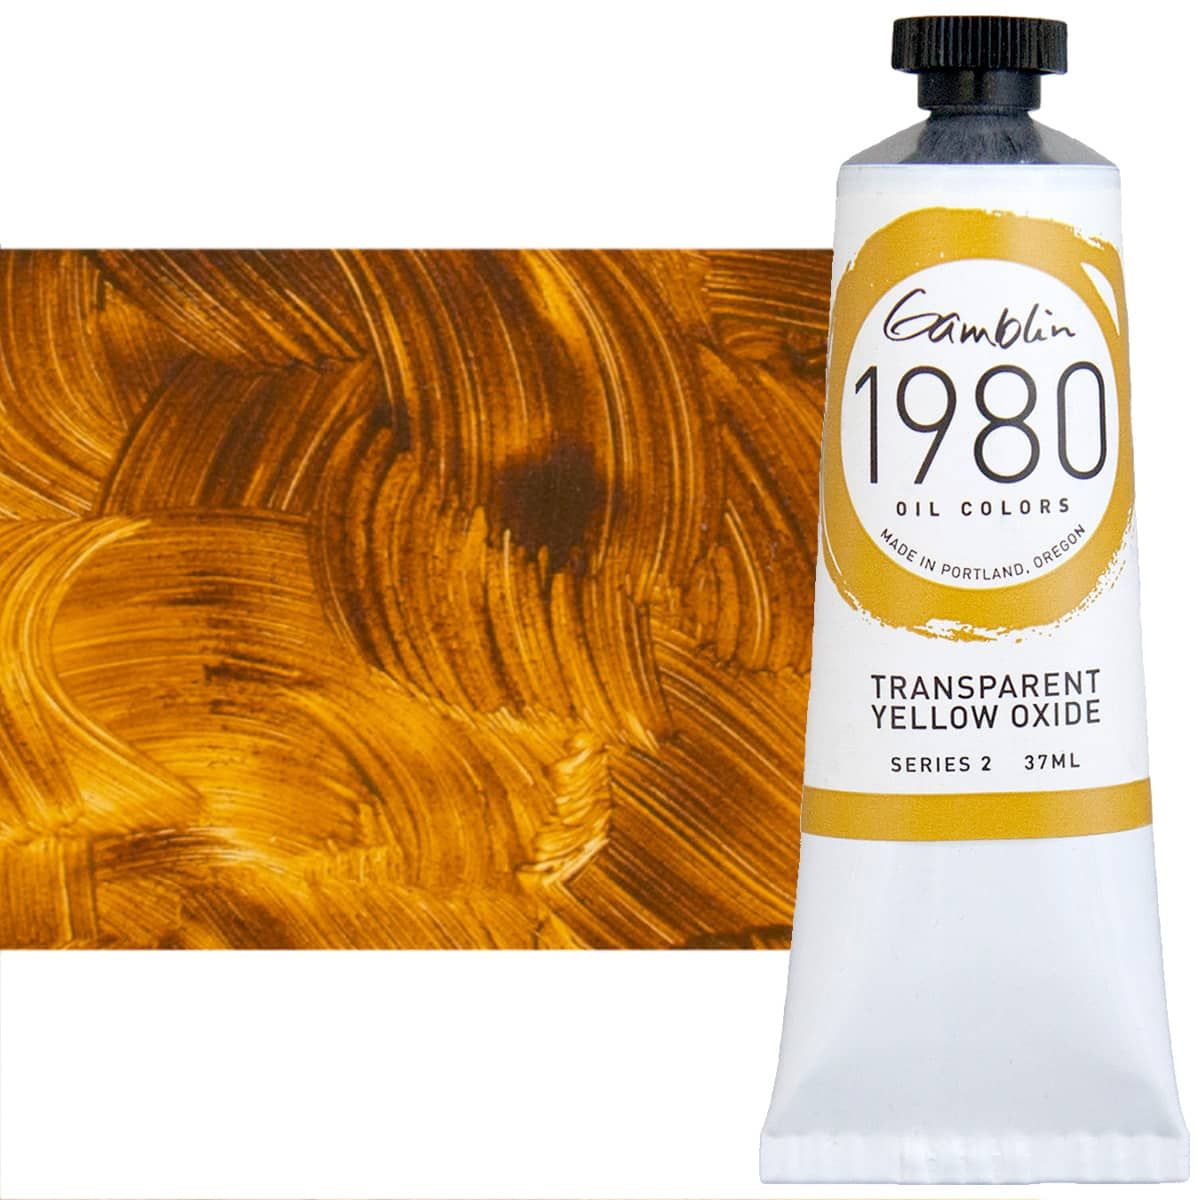 Gamblin | 1980 Oil 37ml Chromium Oxide Green